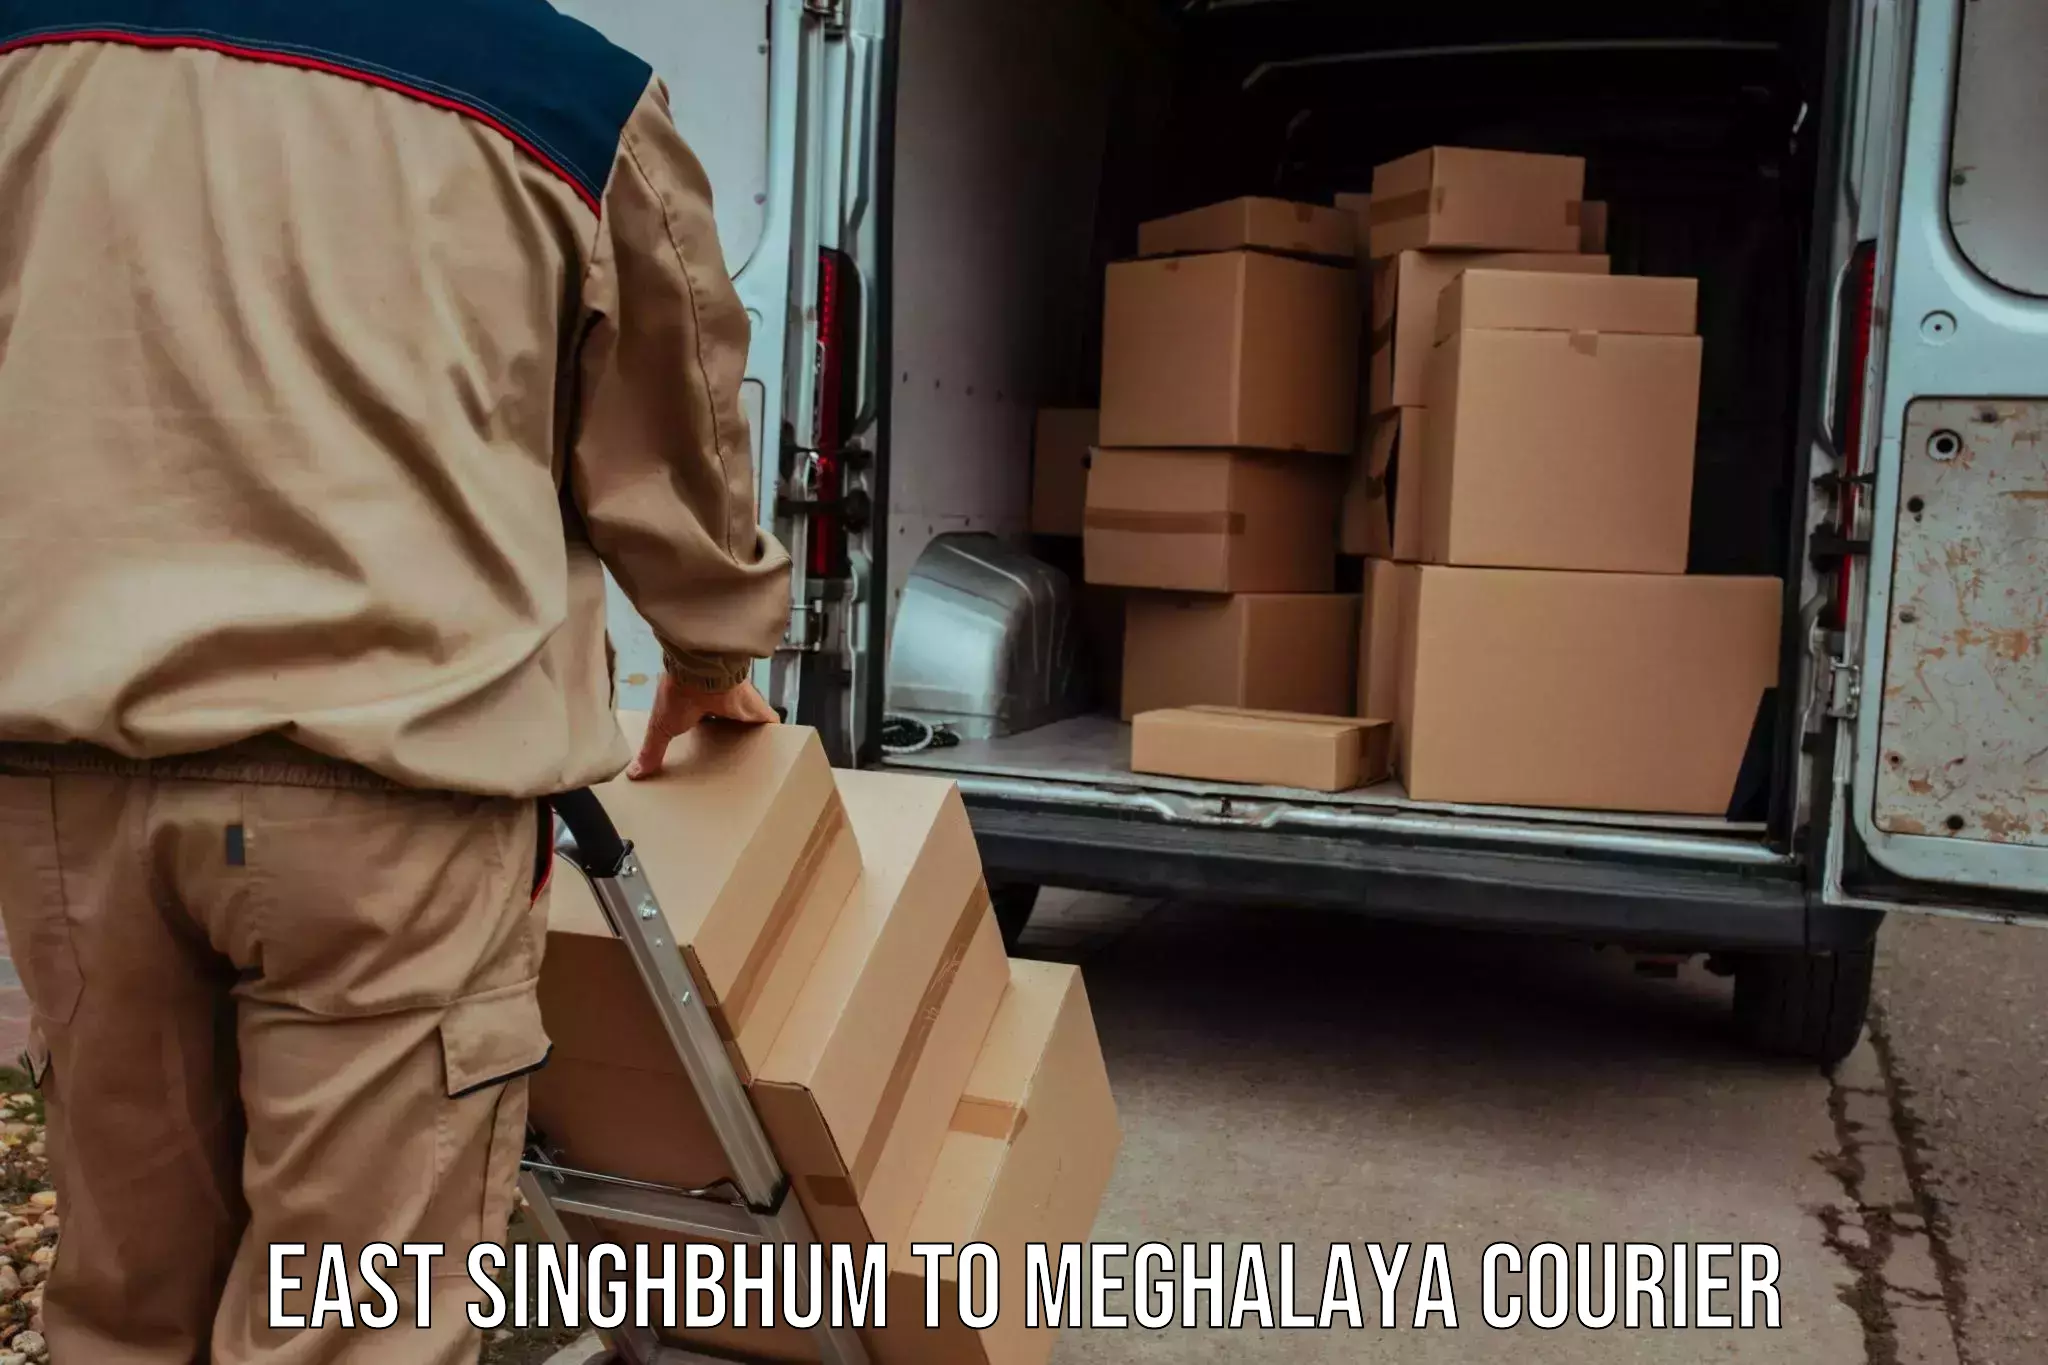 International parcel service East Singhbhum to Shillong